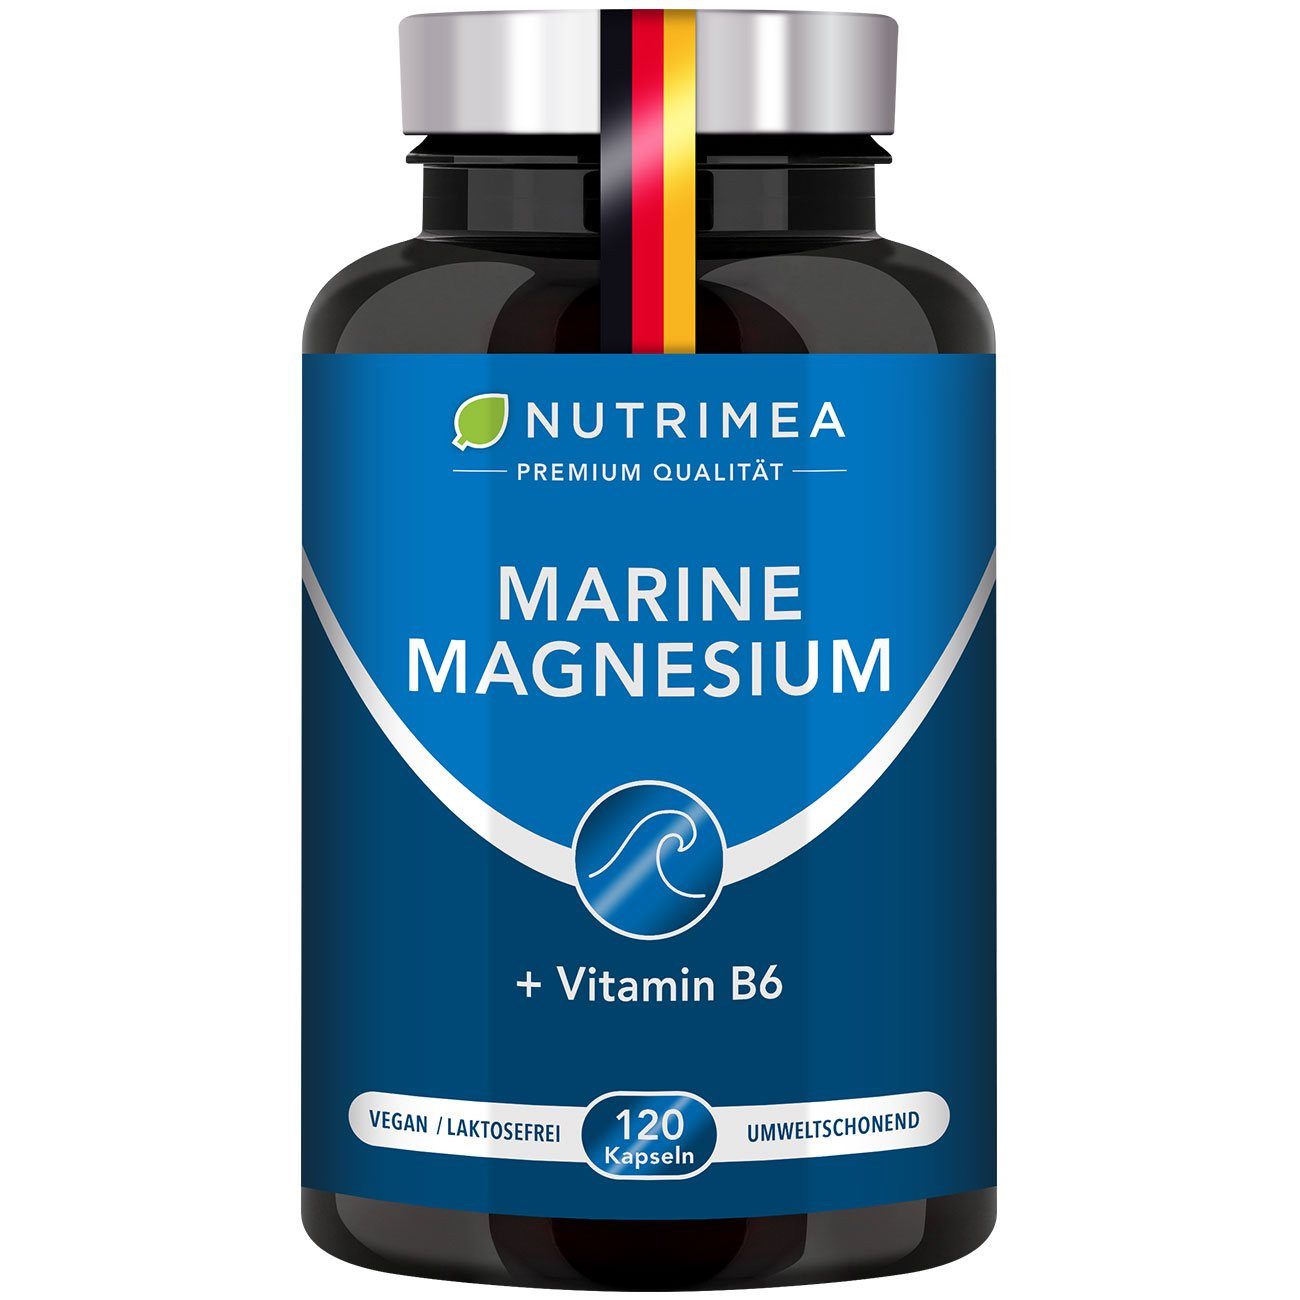 Bild des Nahrungsergänzungsmittels Magnesium Mare + Vitamin B6